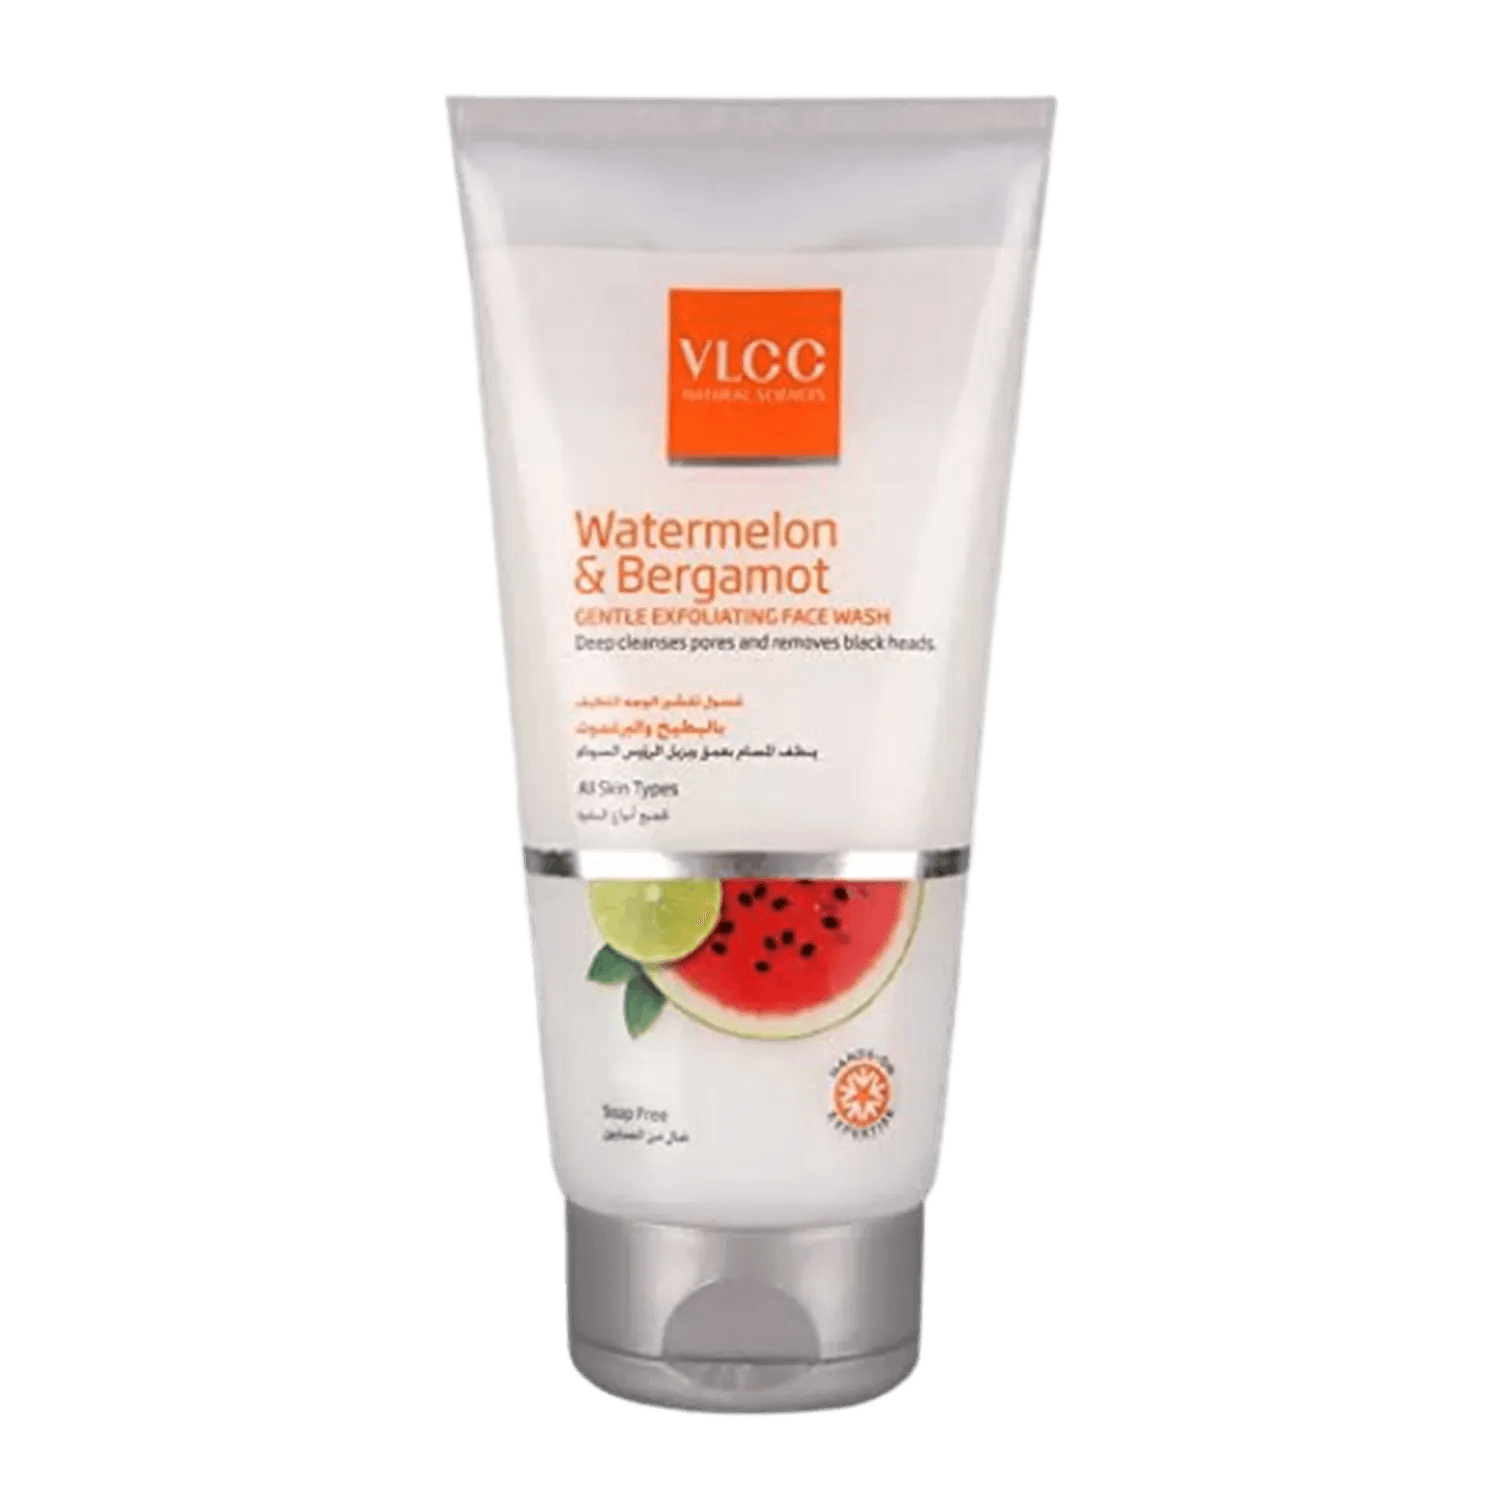 VLCC | VLCC Watermelon and Bergamot Gentle Exfoliating Face Wash (175ml)